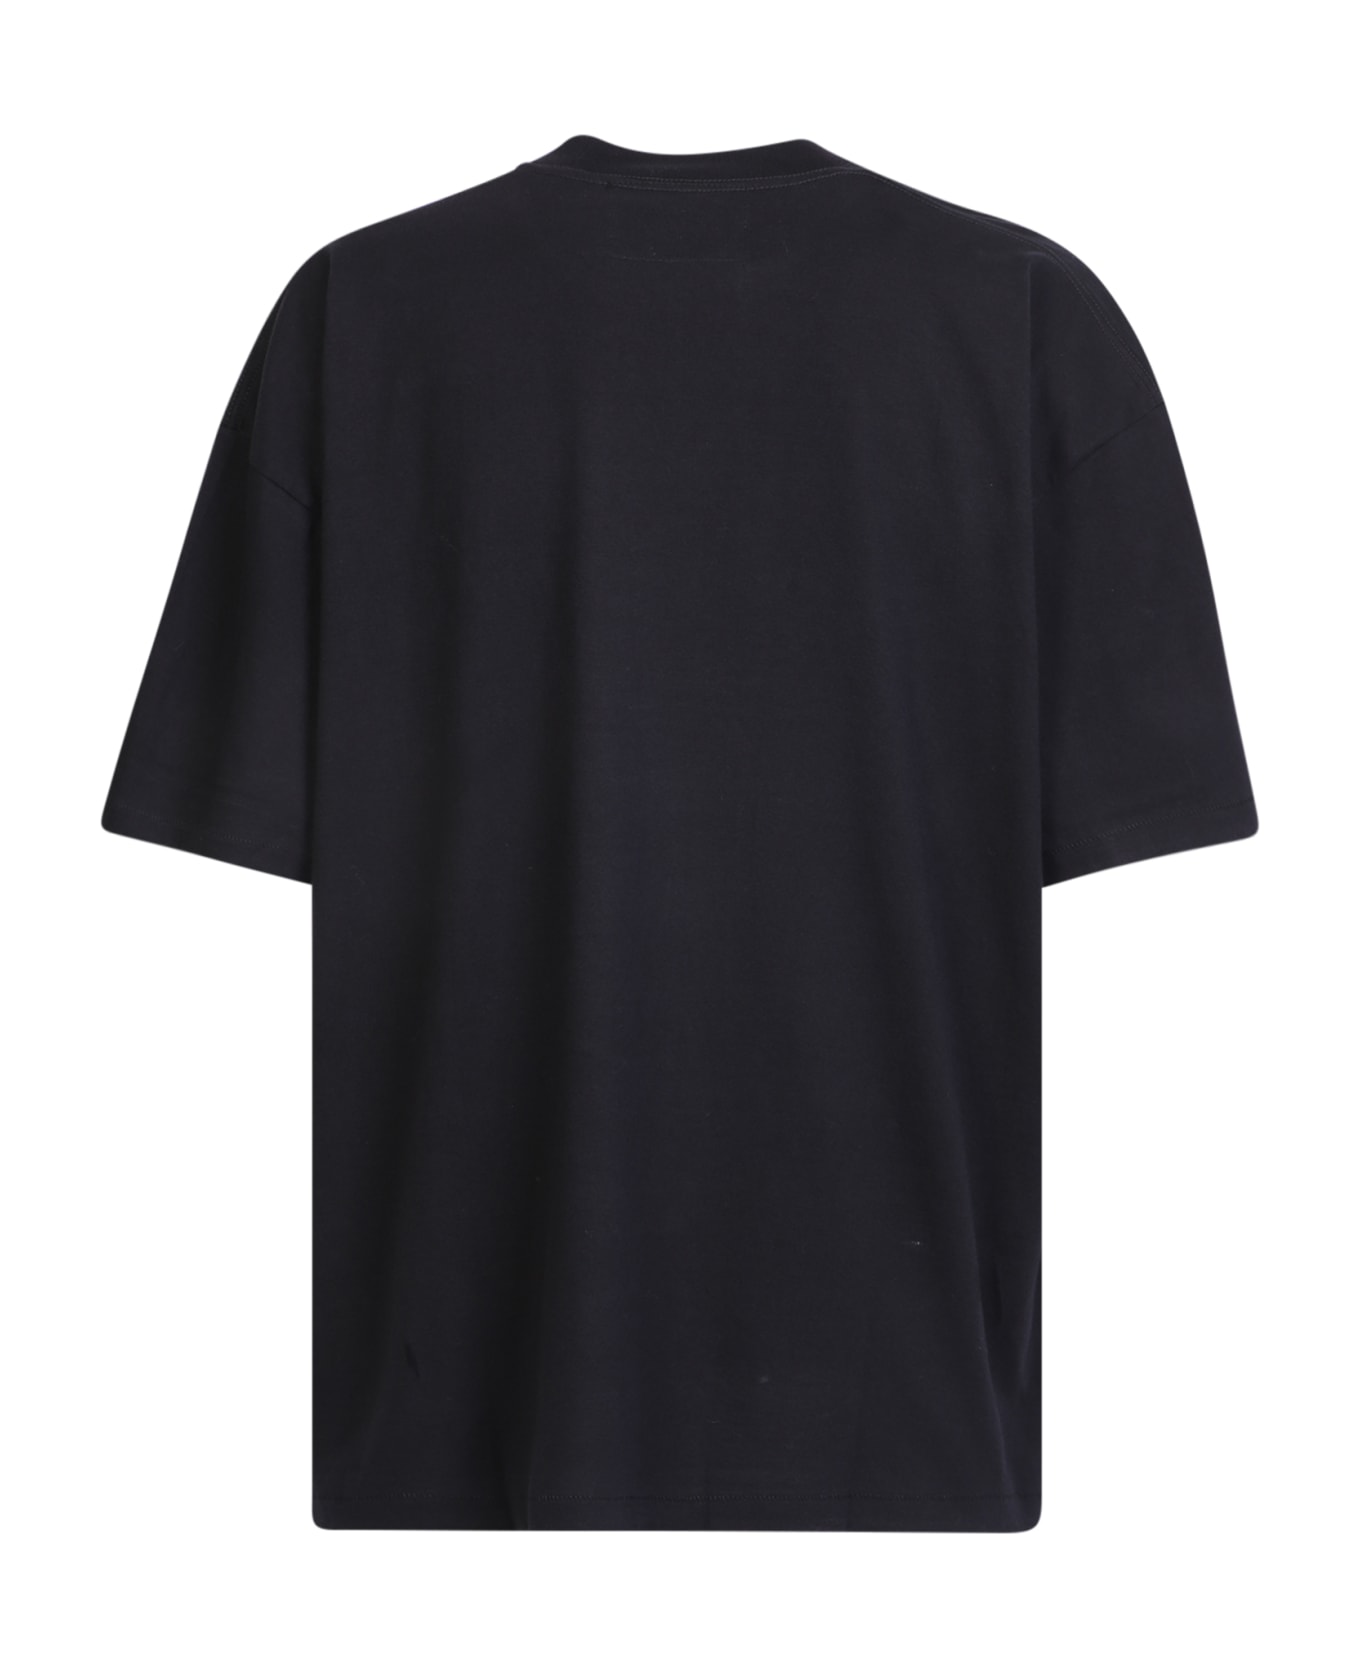 The Salvages Emblem T-shirt - Black シャツ